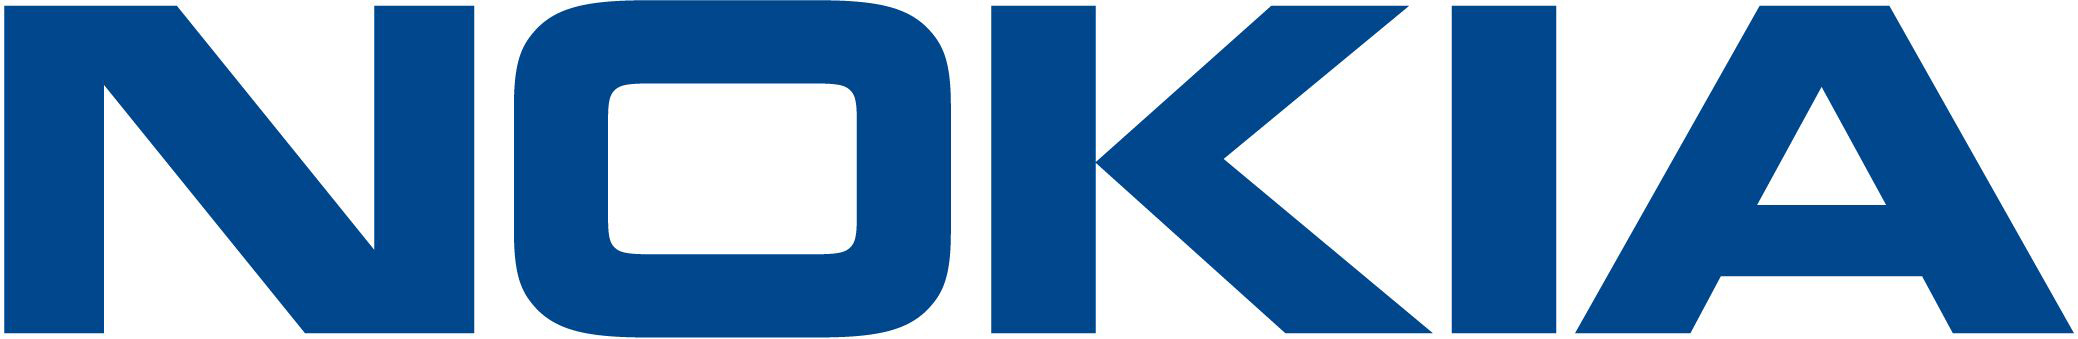 Nokia (Handsets Only) Brand Logo